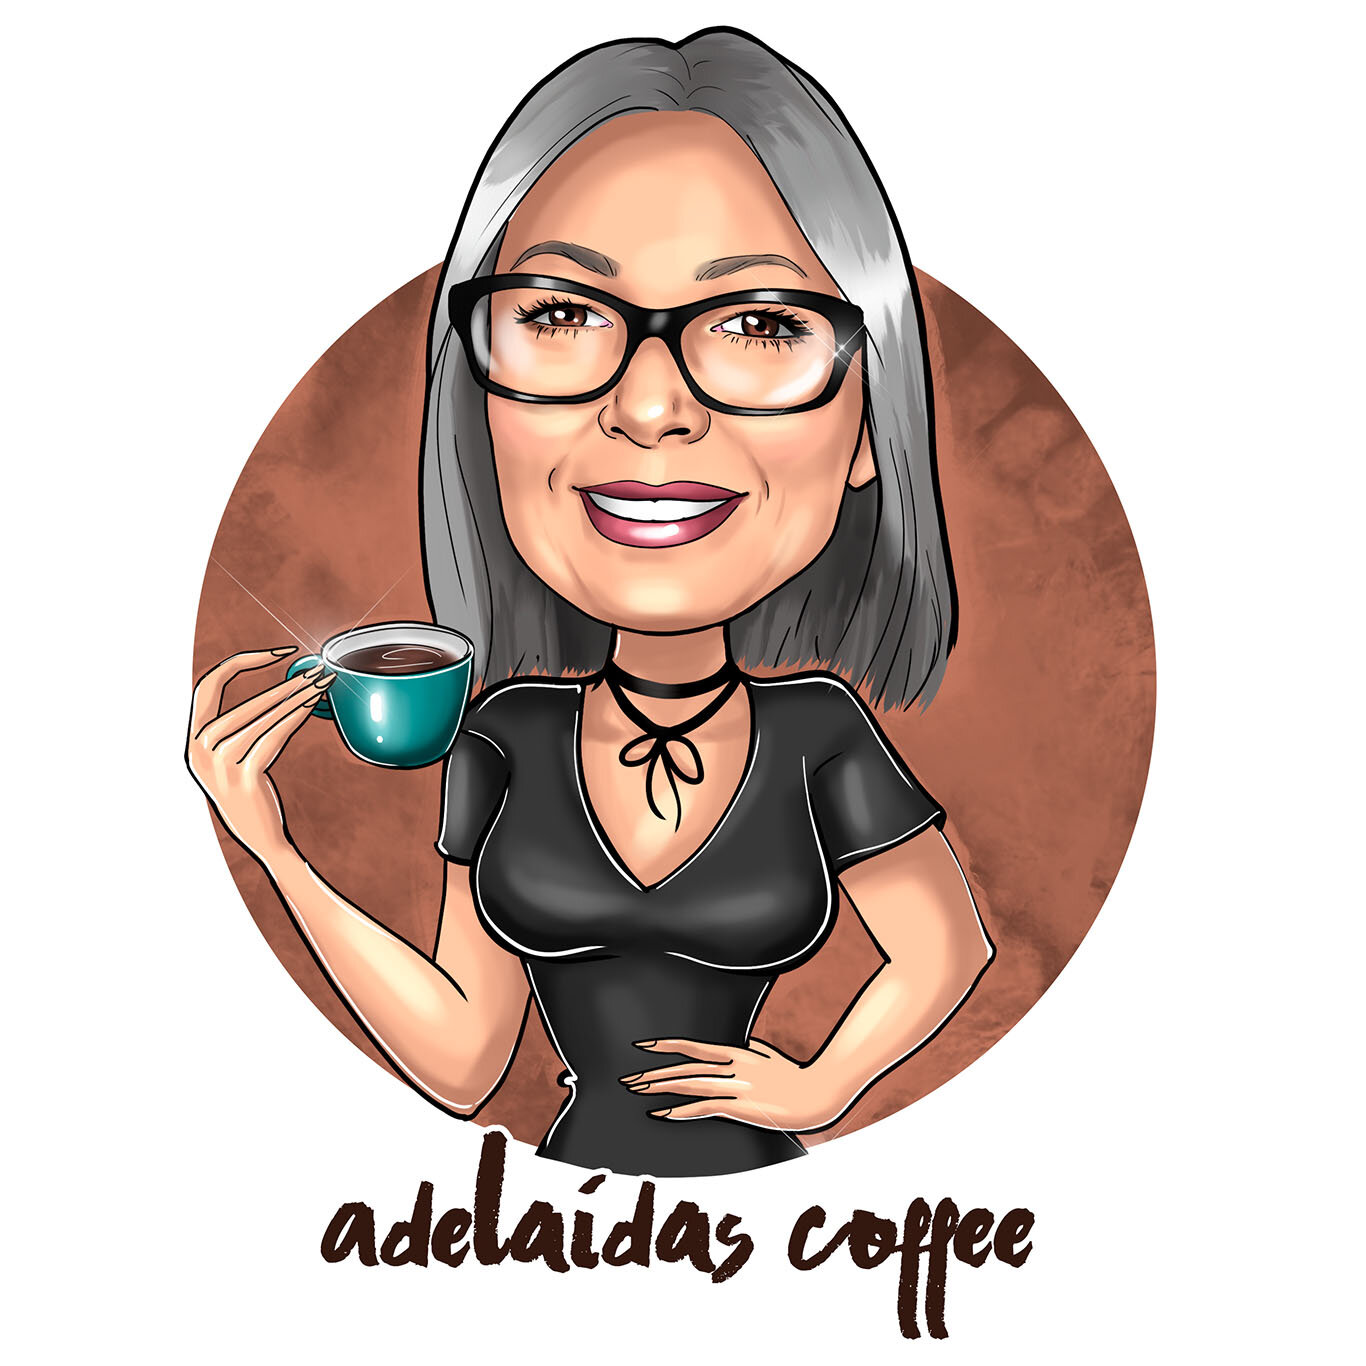 coffee brand logo-portrait logo for women-brand my business.jpg